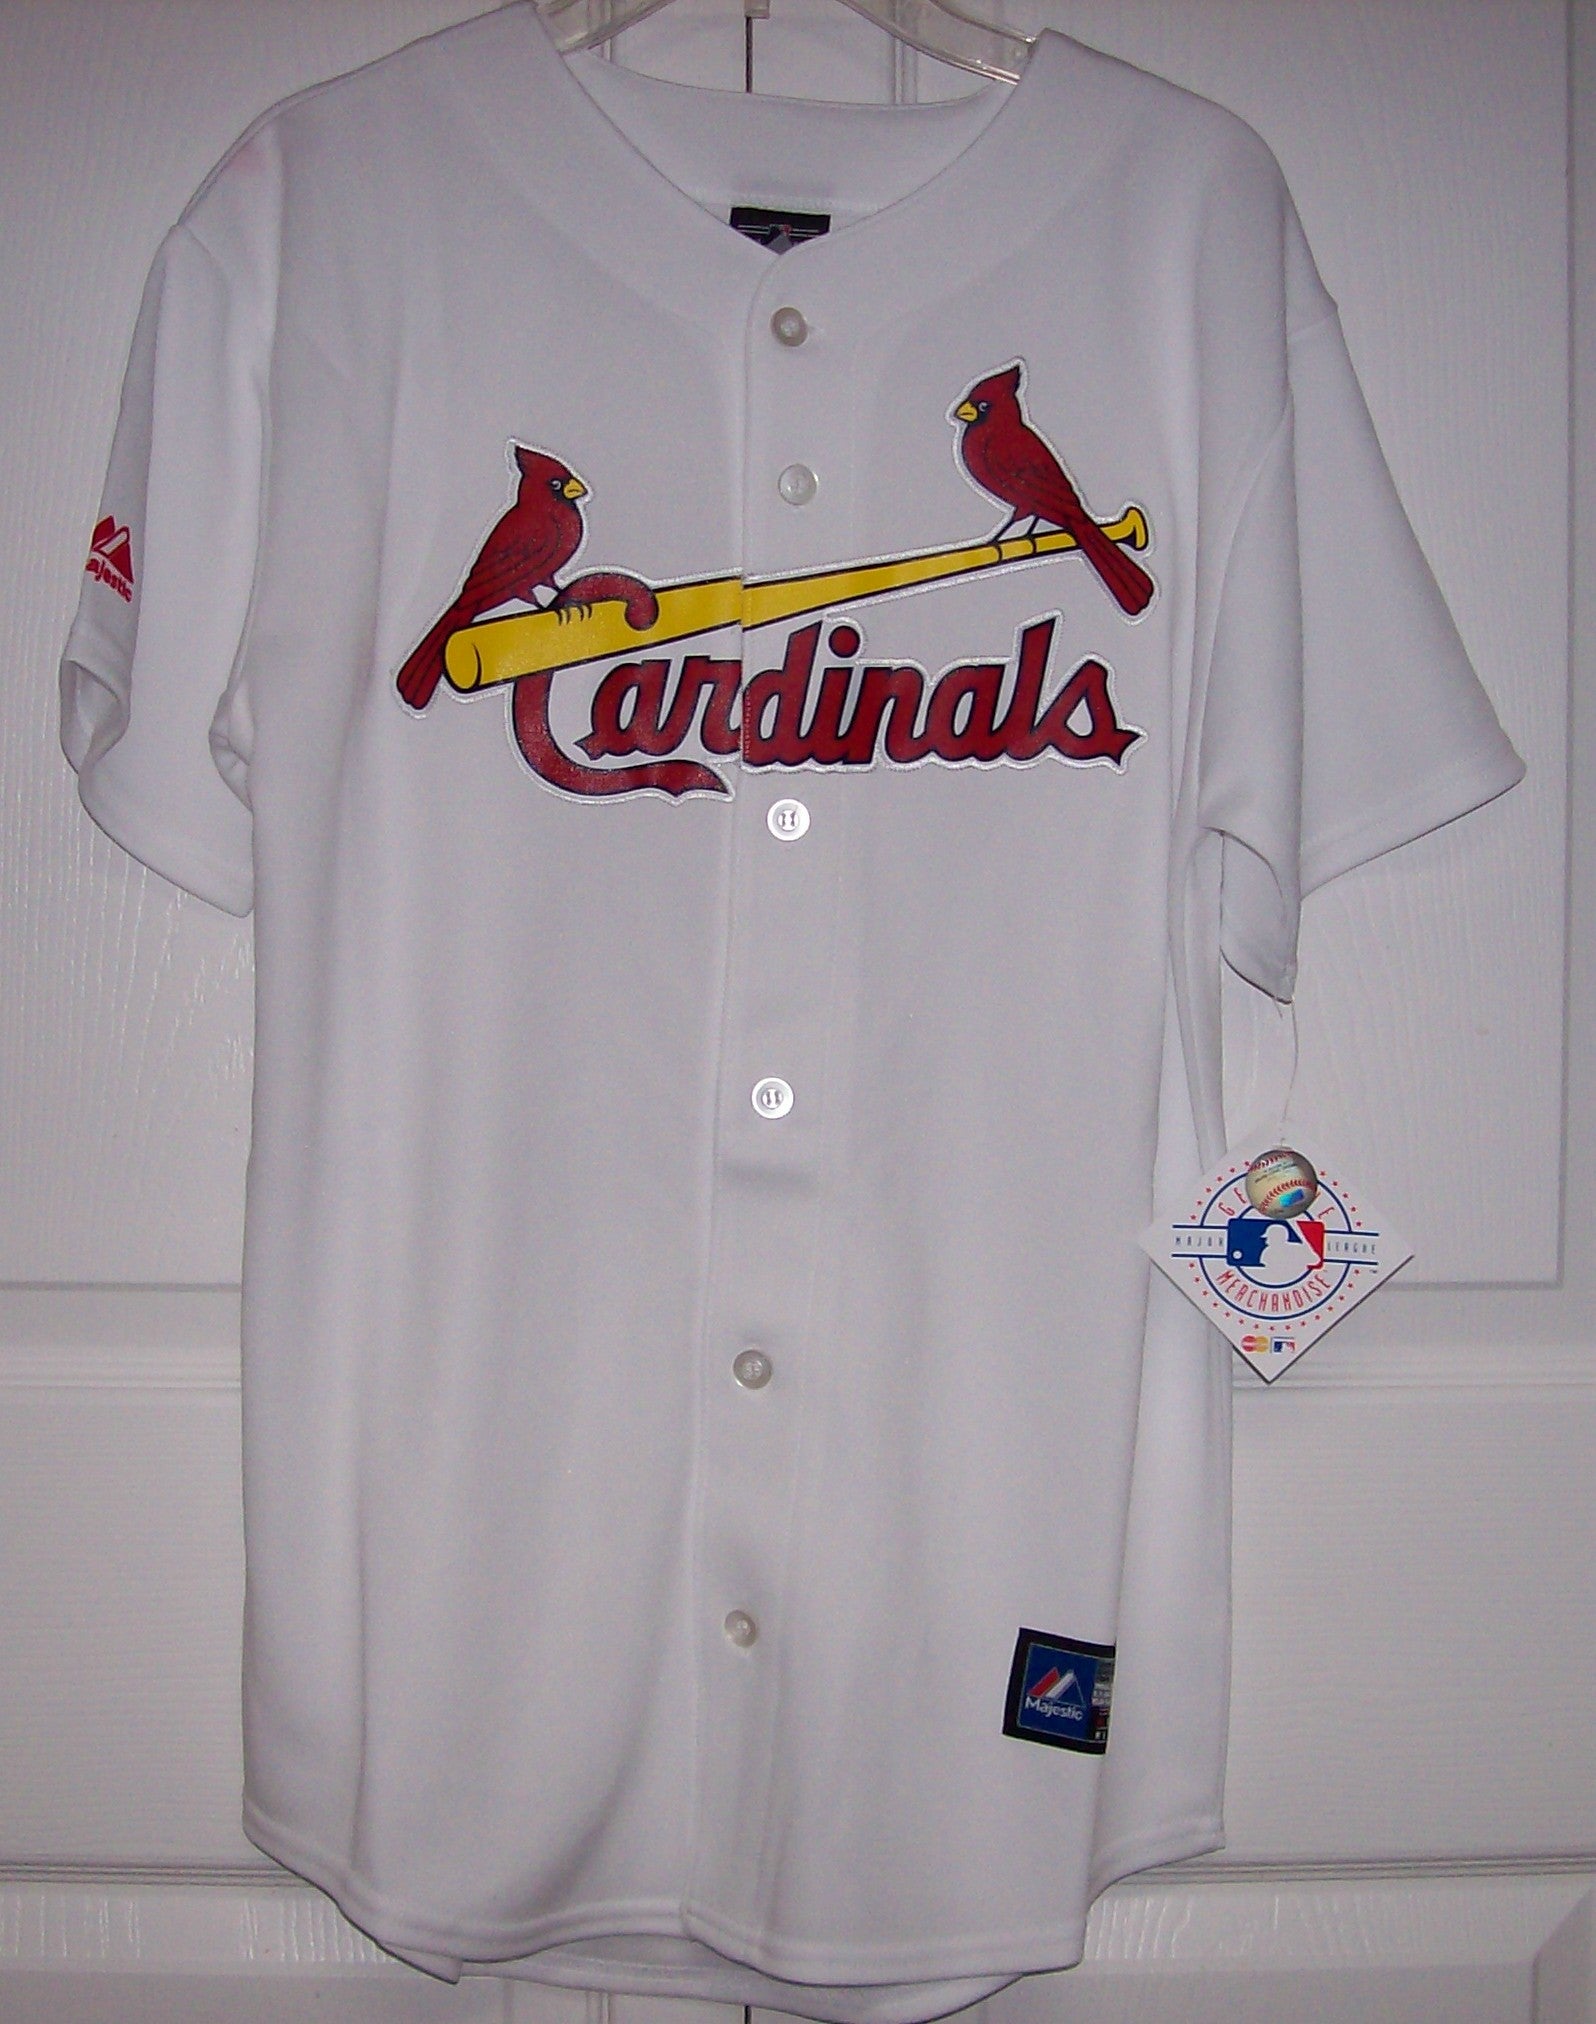 MLB St. Louis Cardinals (Yadier Molina) Men's Replica Baseball Jersey.